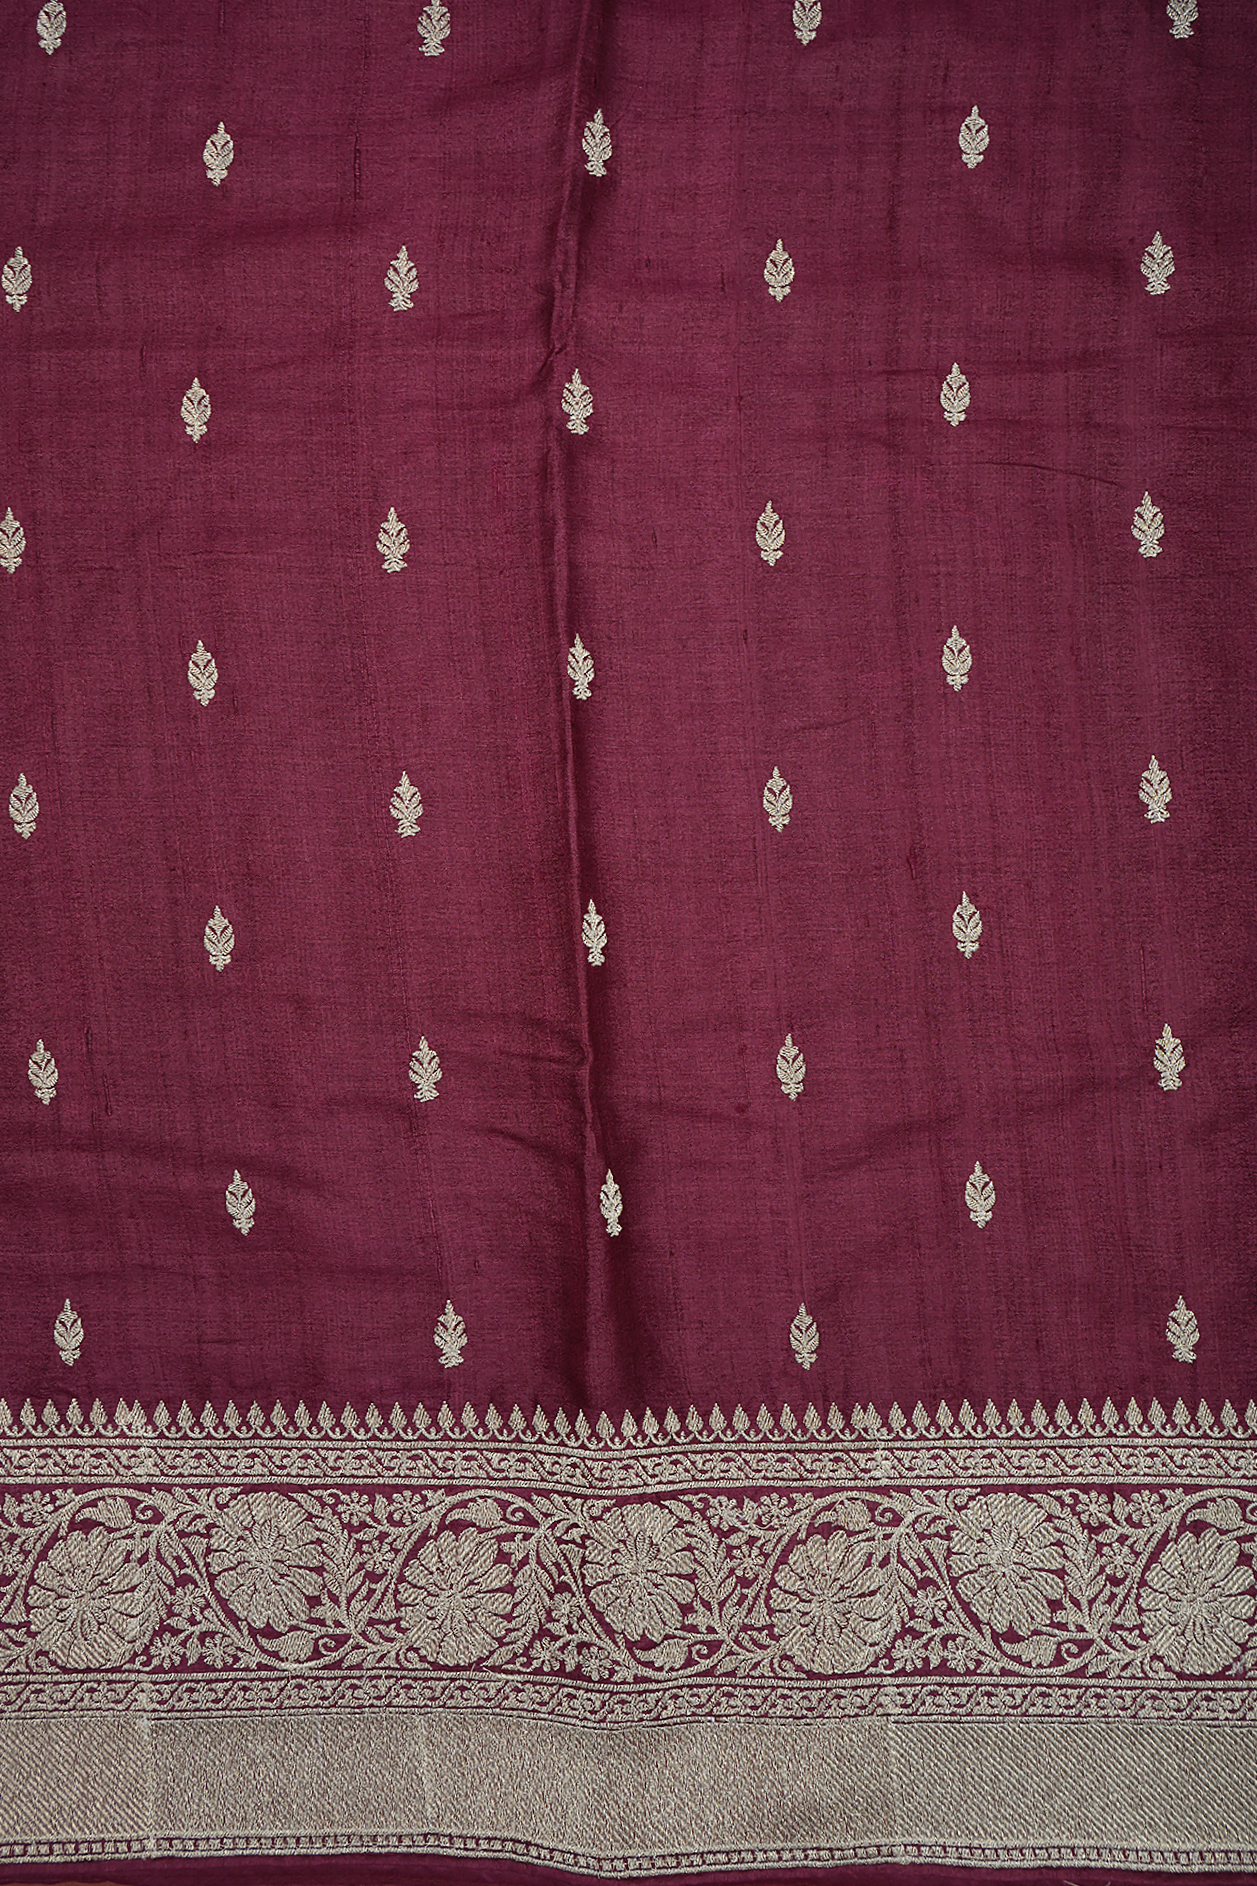 Embroidered Buttas Berry Purple Tussar Silk Saree